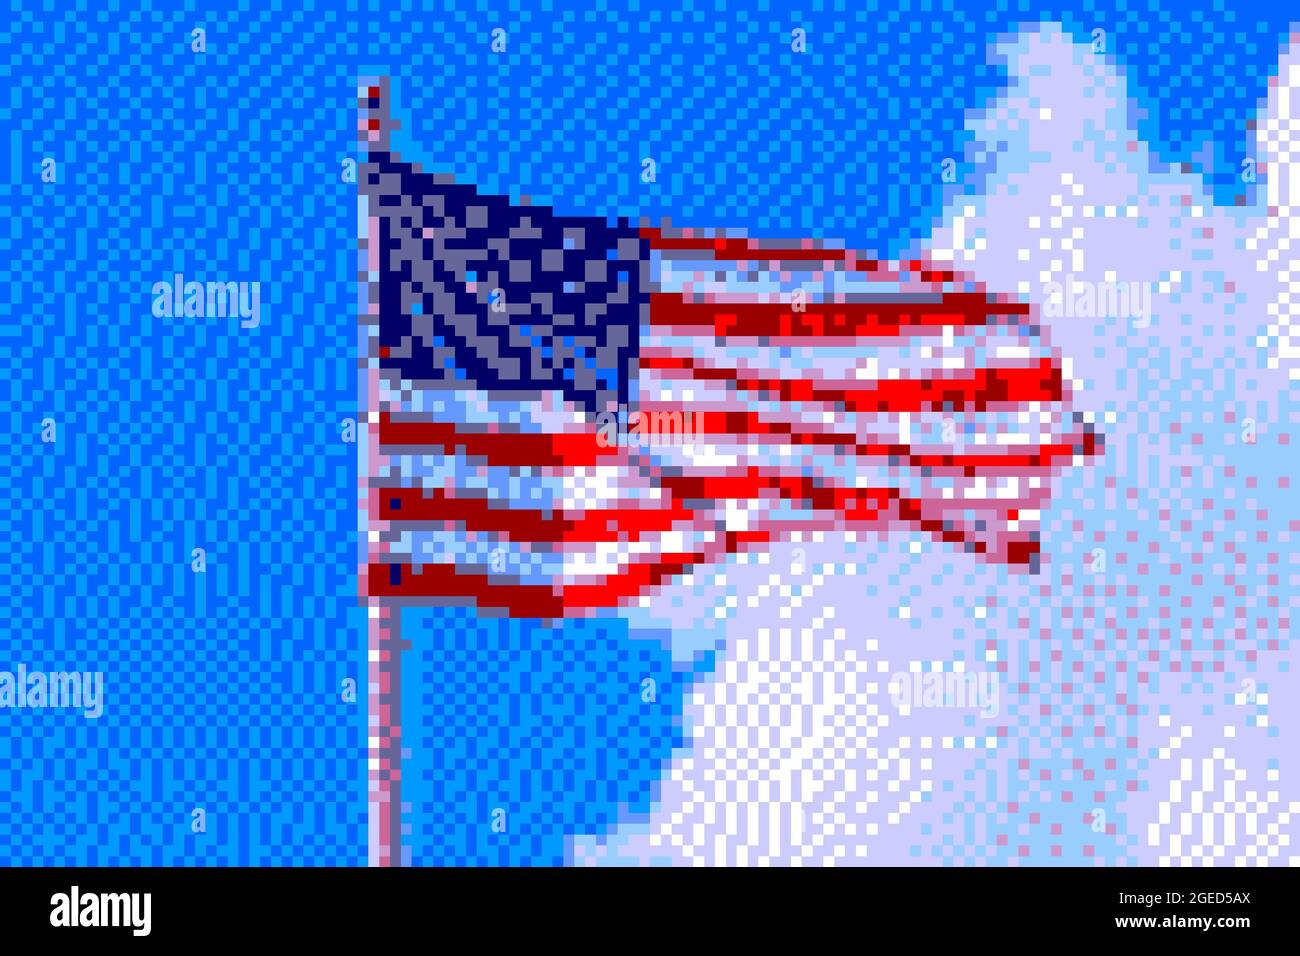 Pixel art 8-bit style graphics. American flag. Stock Photo